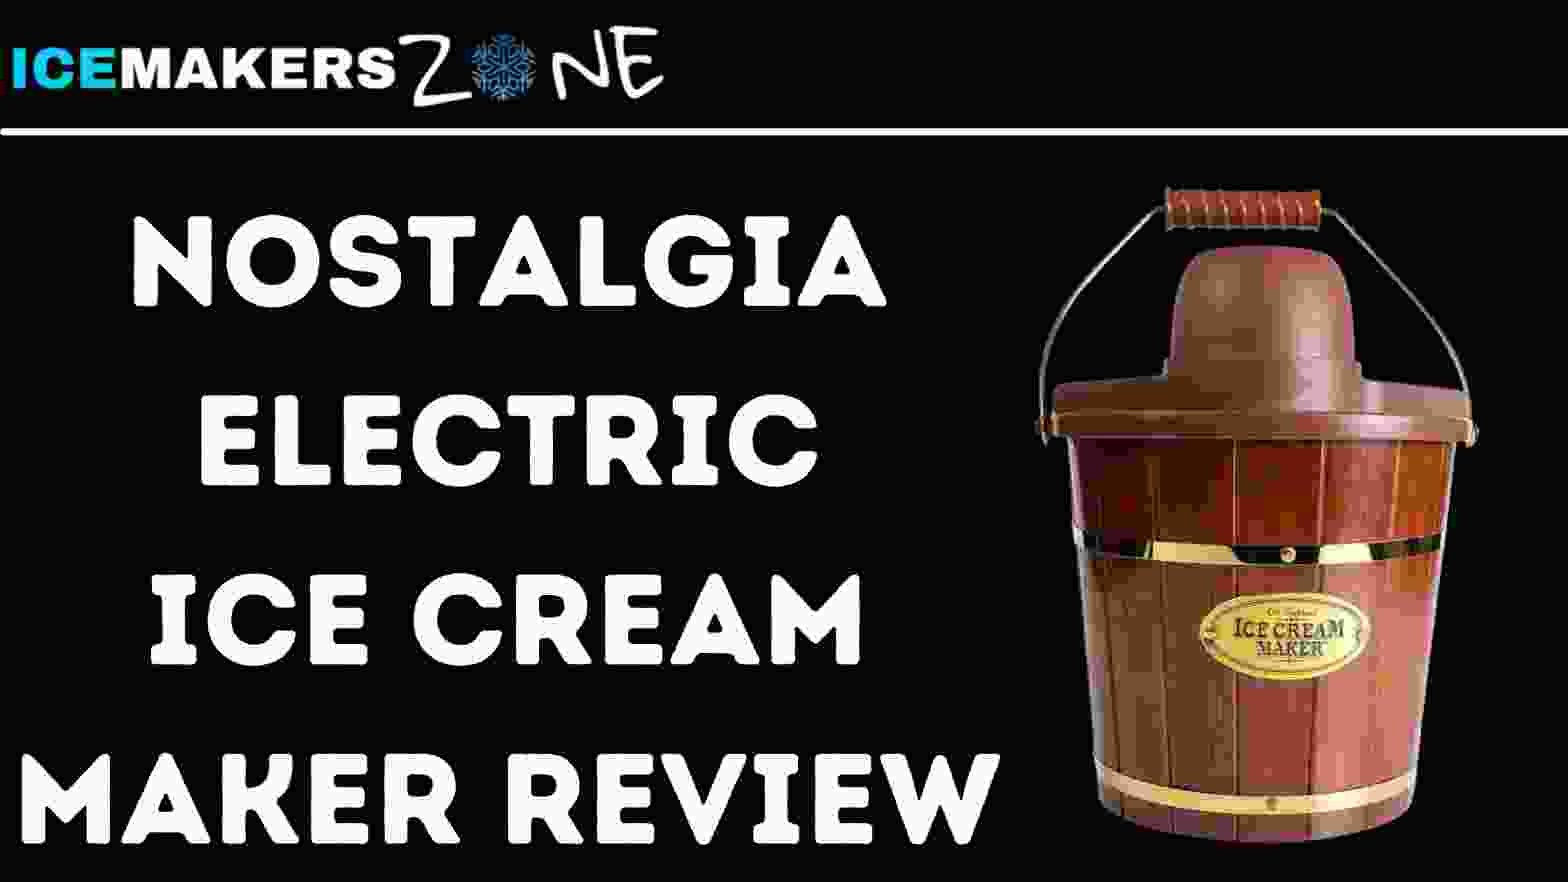 Nostalgia Electric Ice Cream Maker Review